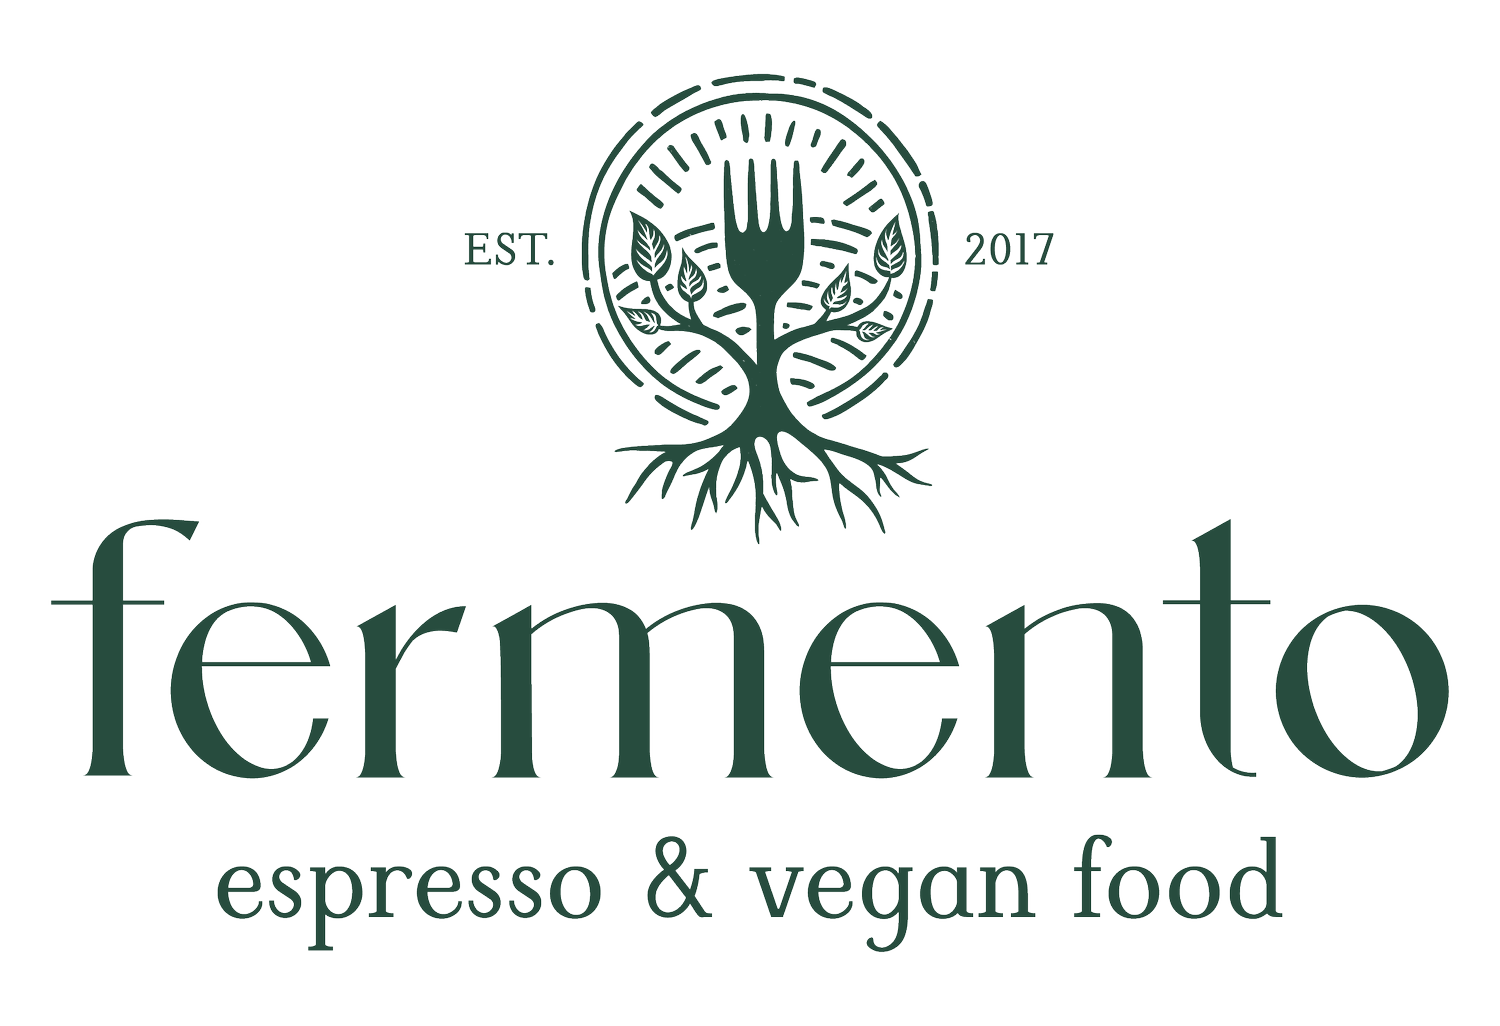 FERMENTO espresso &amp; vegan food